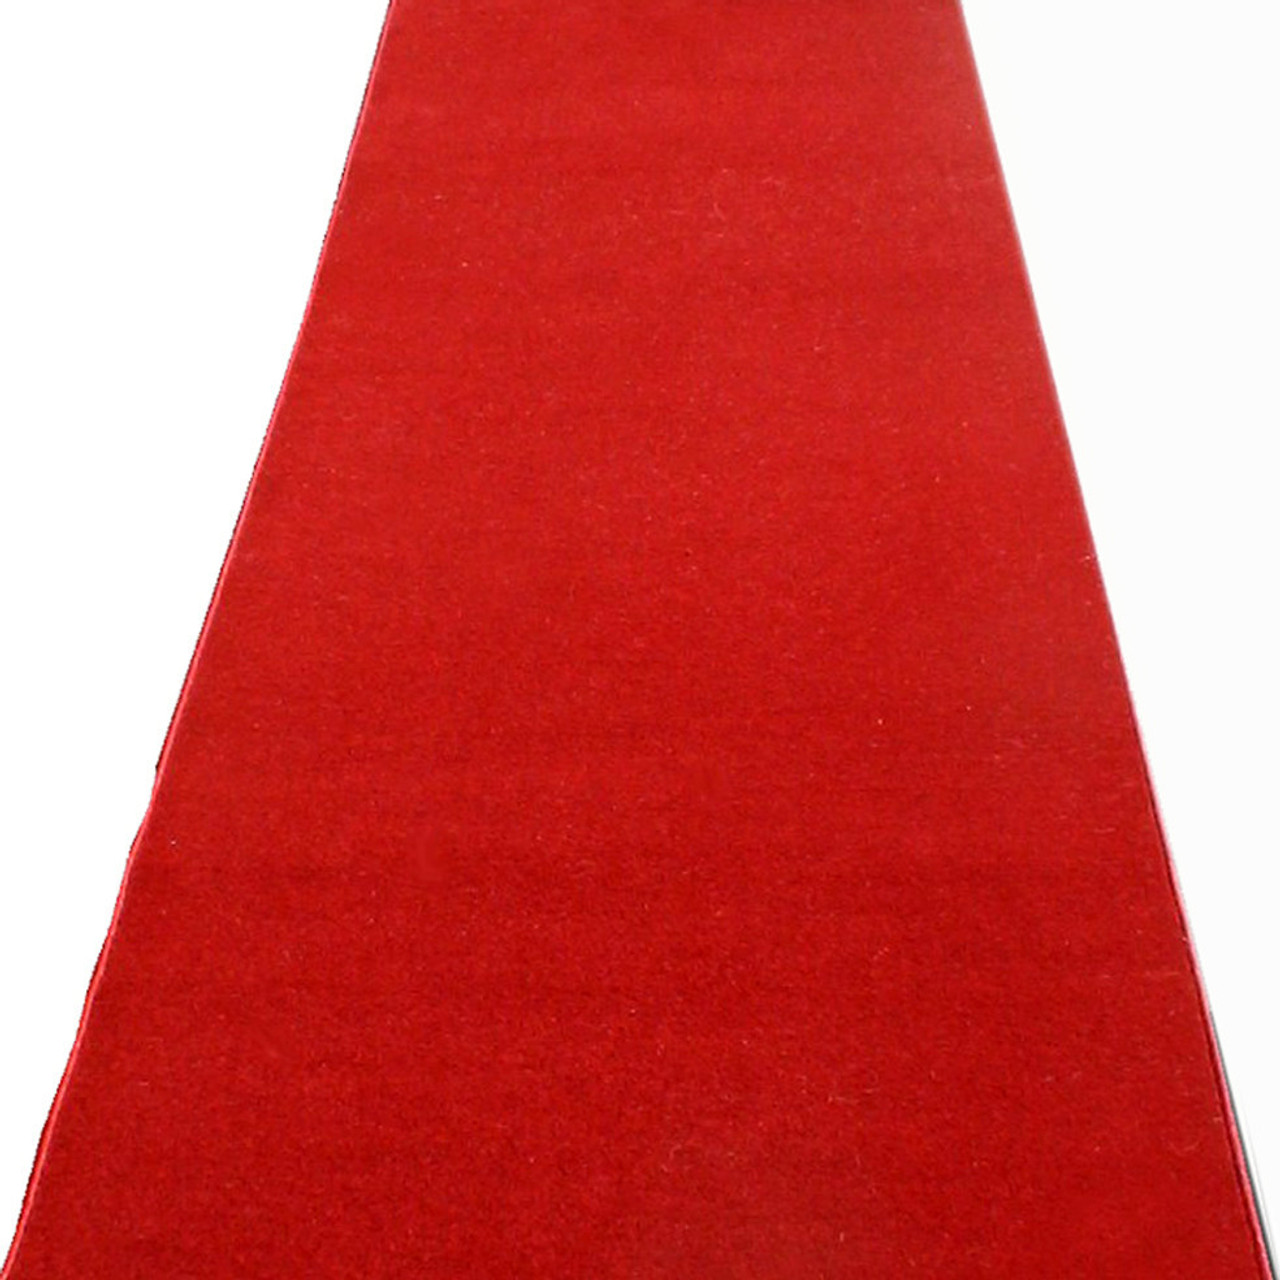 Red Carpet – 1.3m x 3m